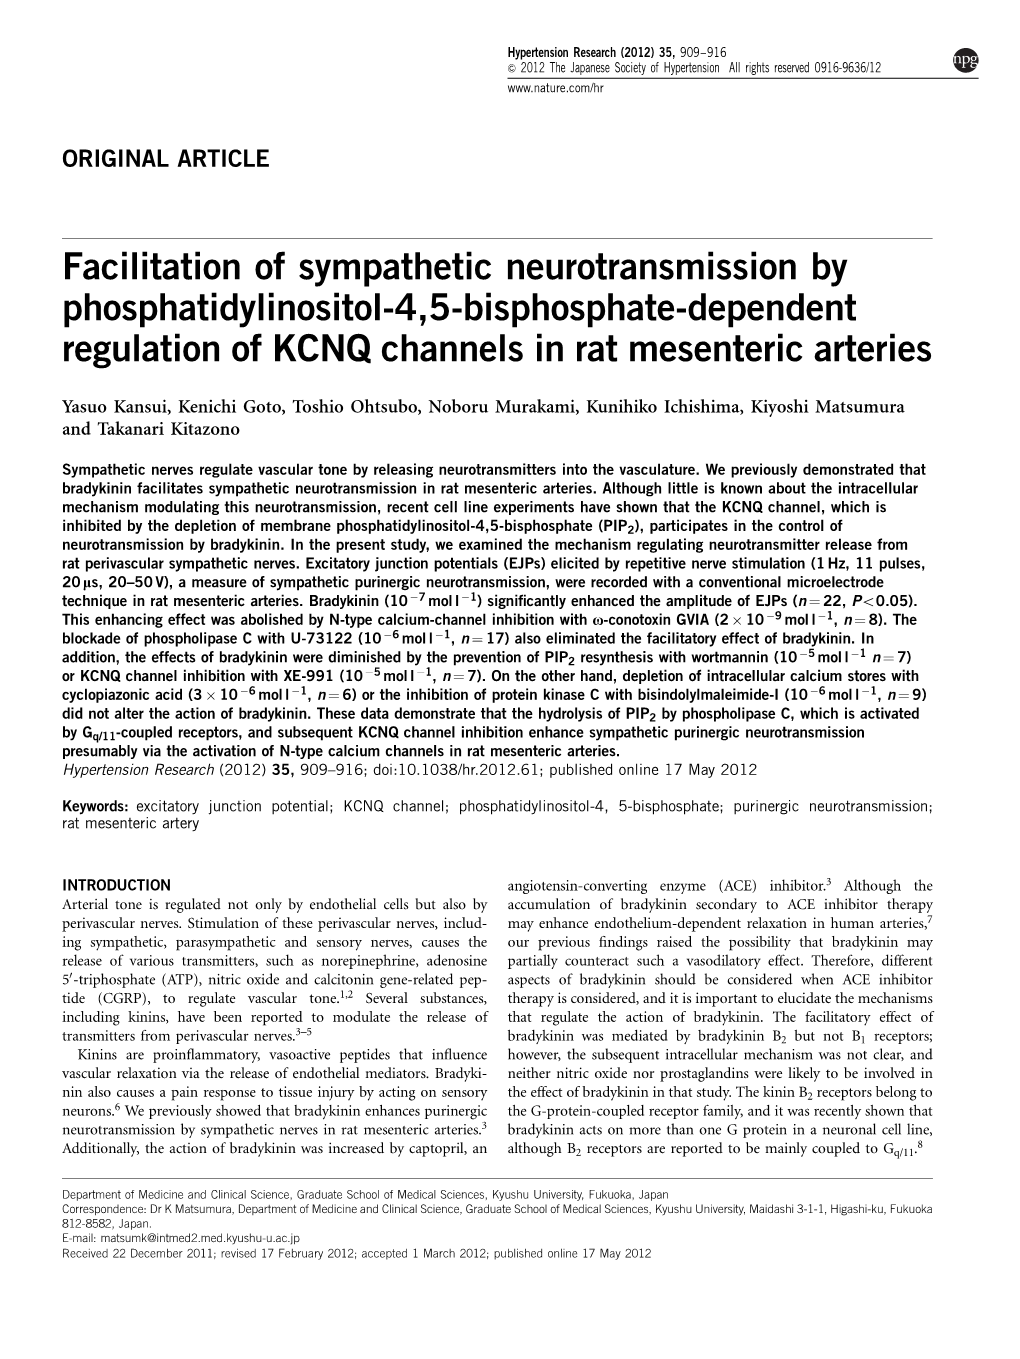 Facilitation of Sympathetic Neurotransmission by Phosphatidylinositol-4,5-Bisphosphate-Dependent Regulation of KCNQ Channels in Rat Mesenteric Arteries